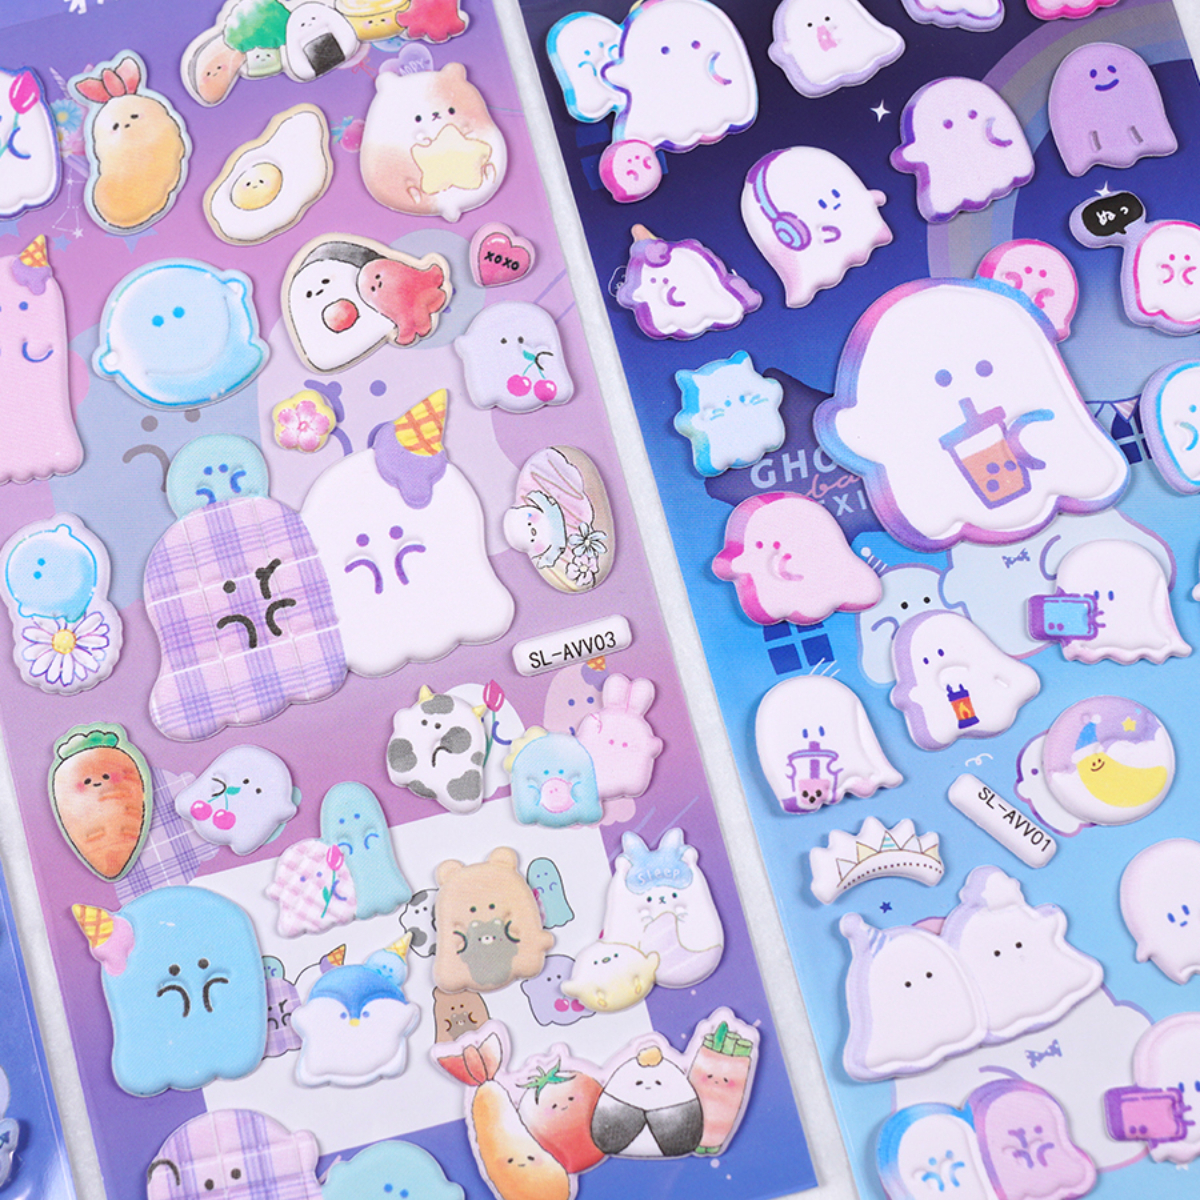 100 Pc Anime Stickers Kawaii Cartoon 3D Puffy Sticker Gift for